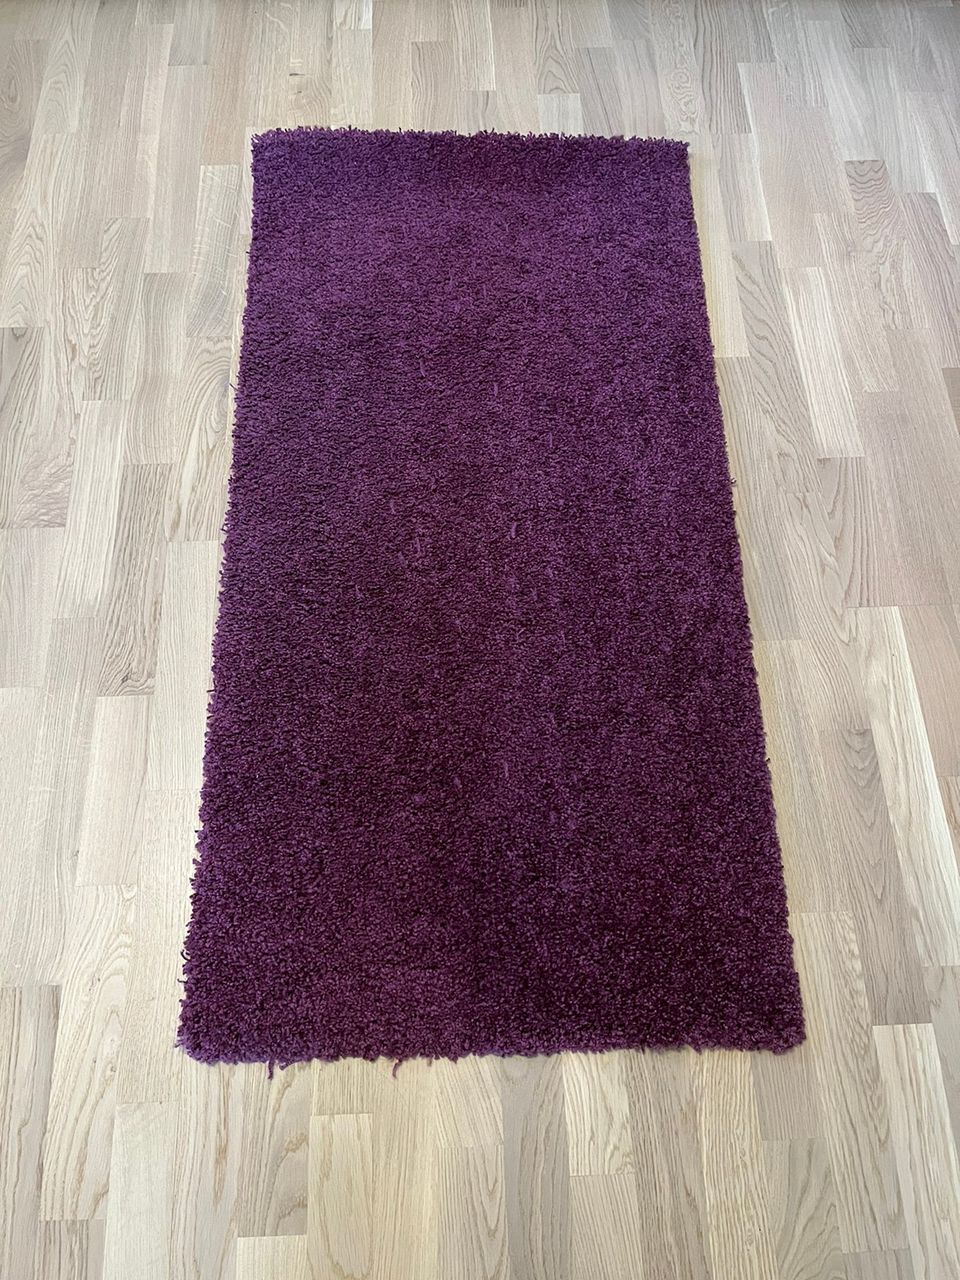 VM-Carpet matto 60x120cm